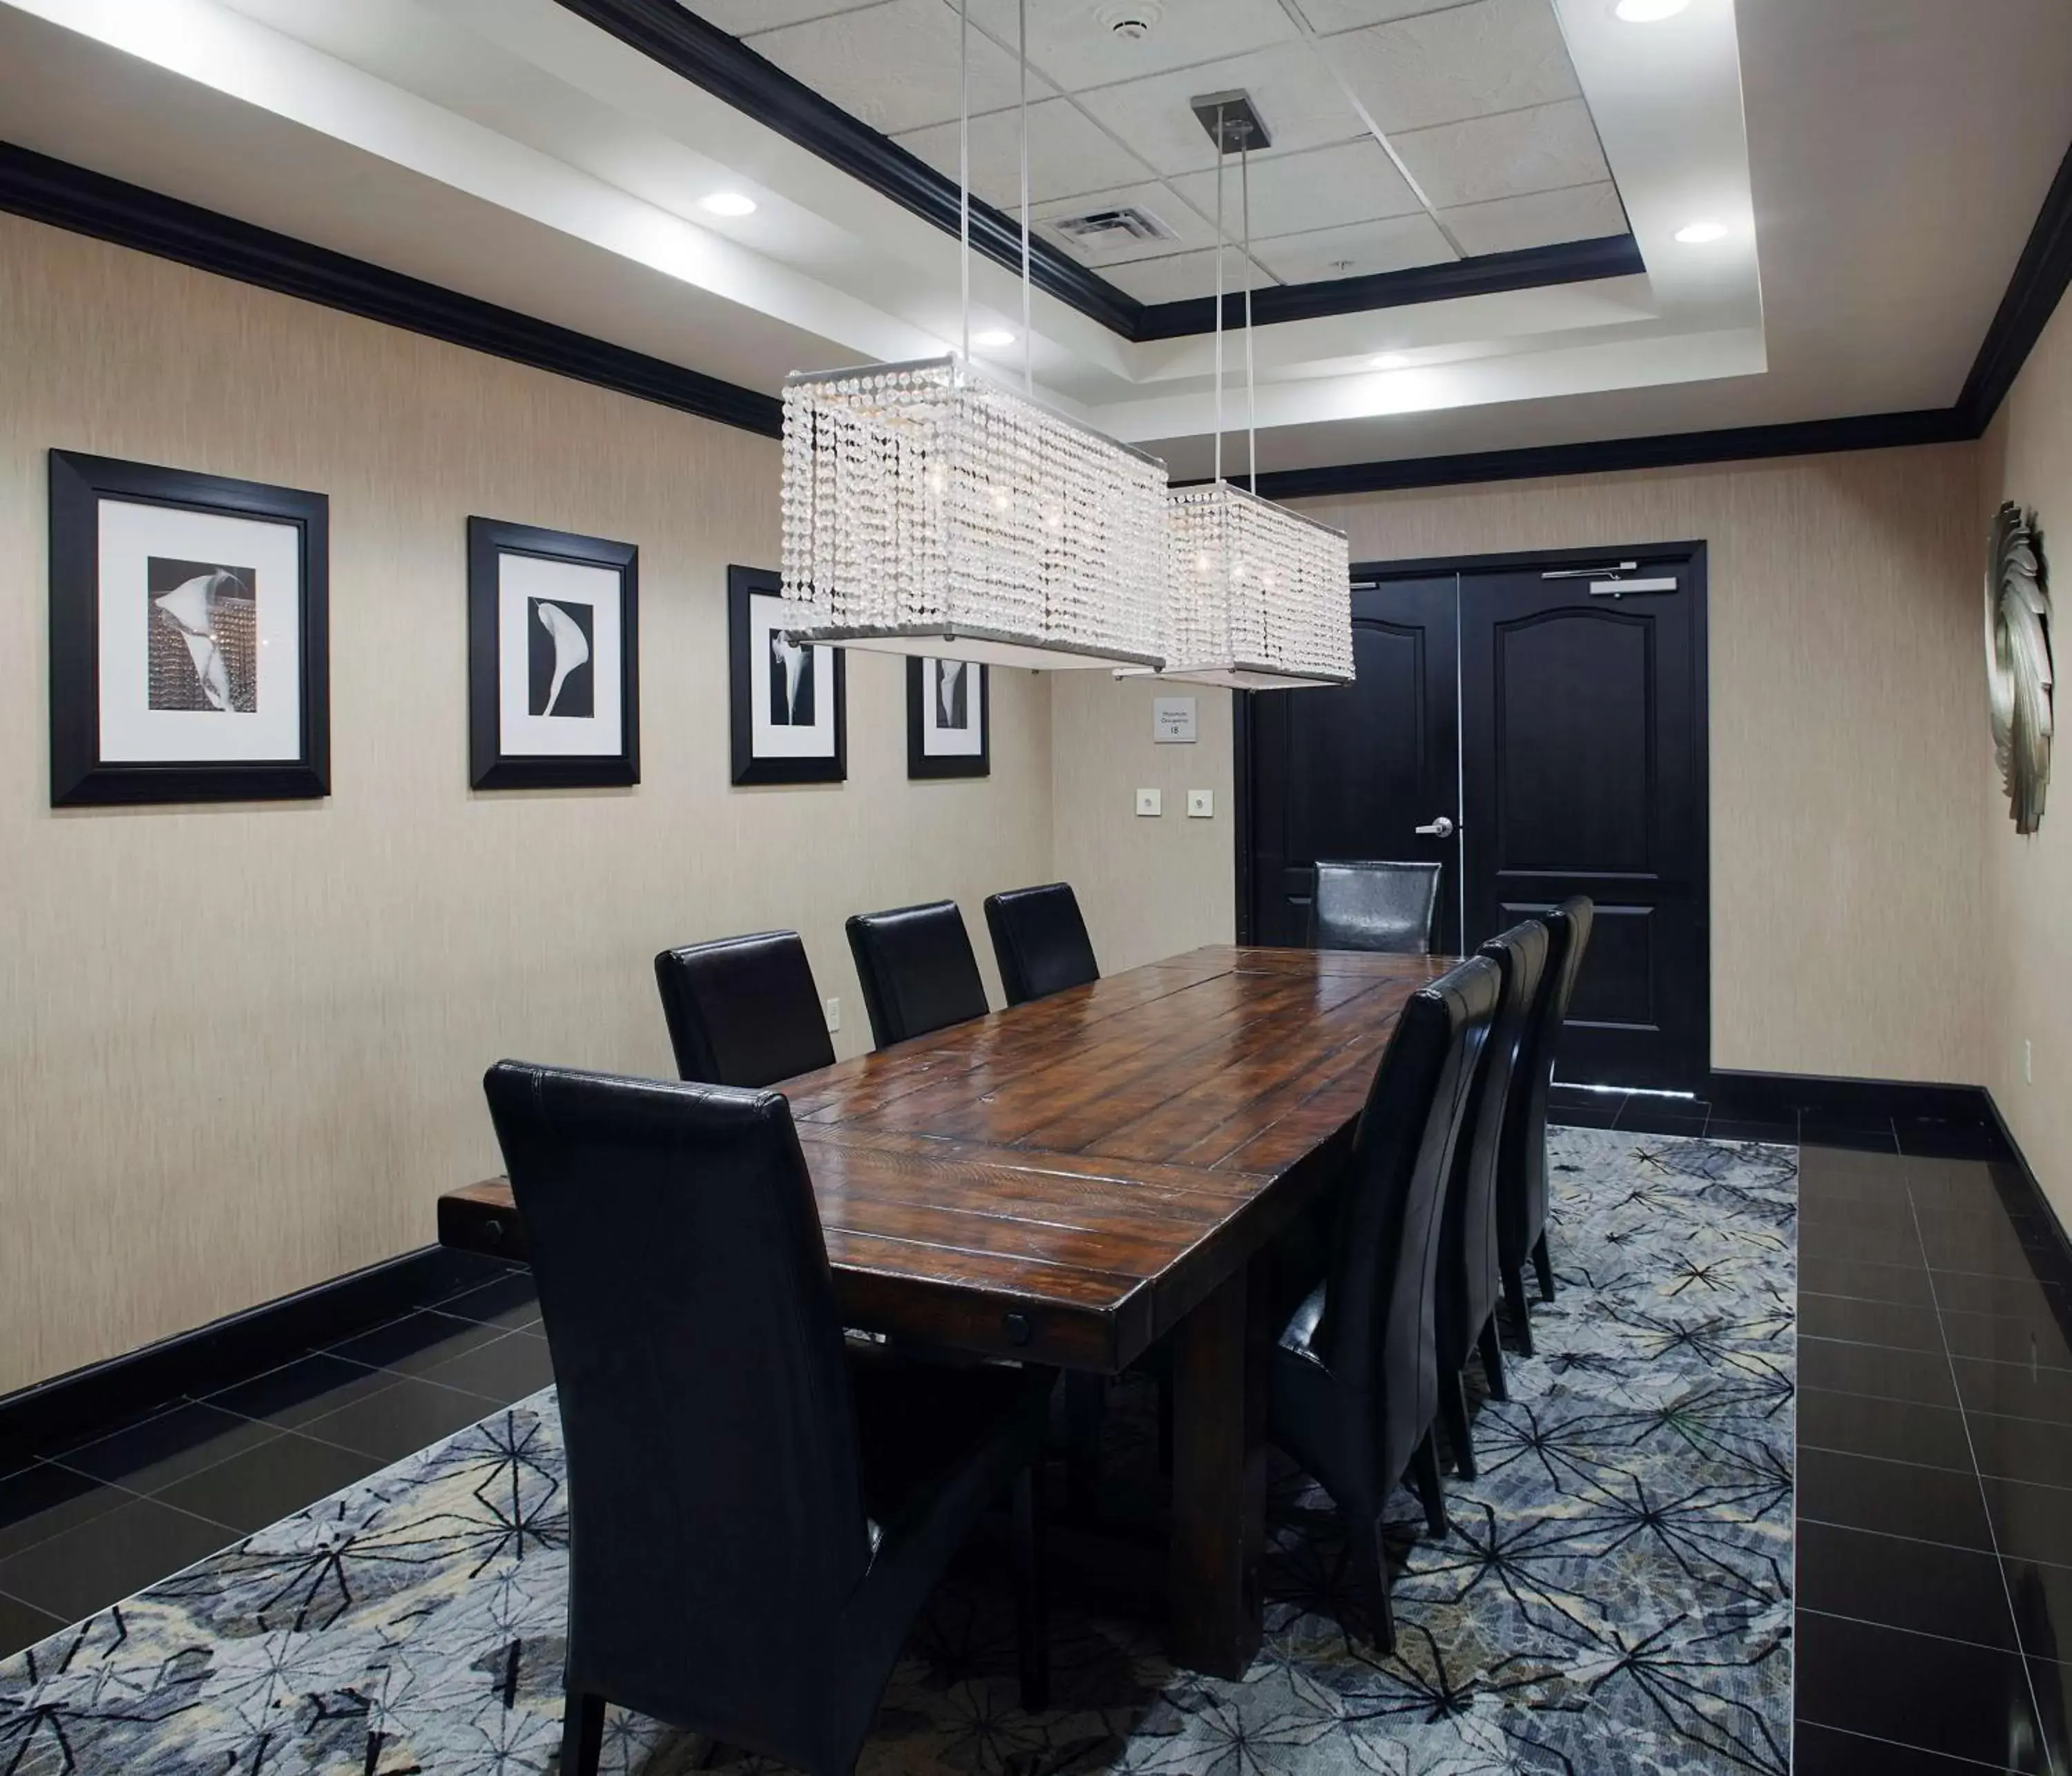 Meeting/conference room, Dining Area in Hilton Garden Inn Jonesboro